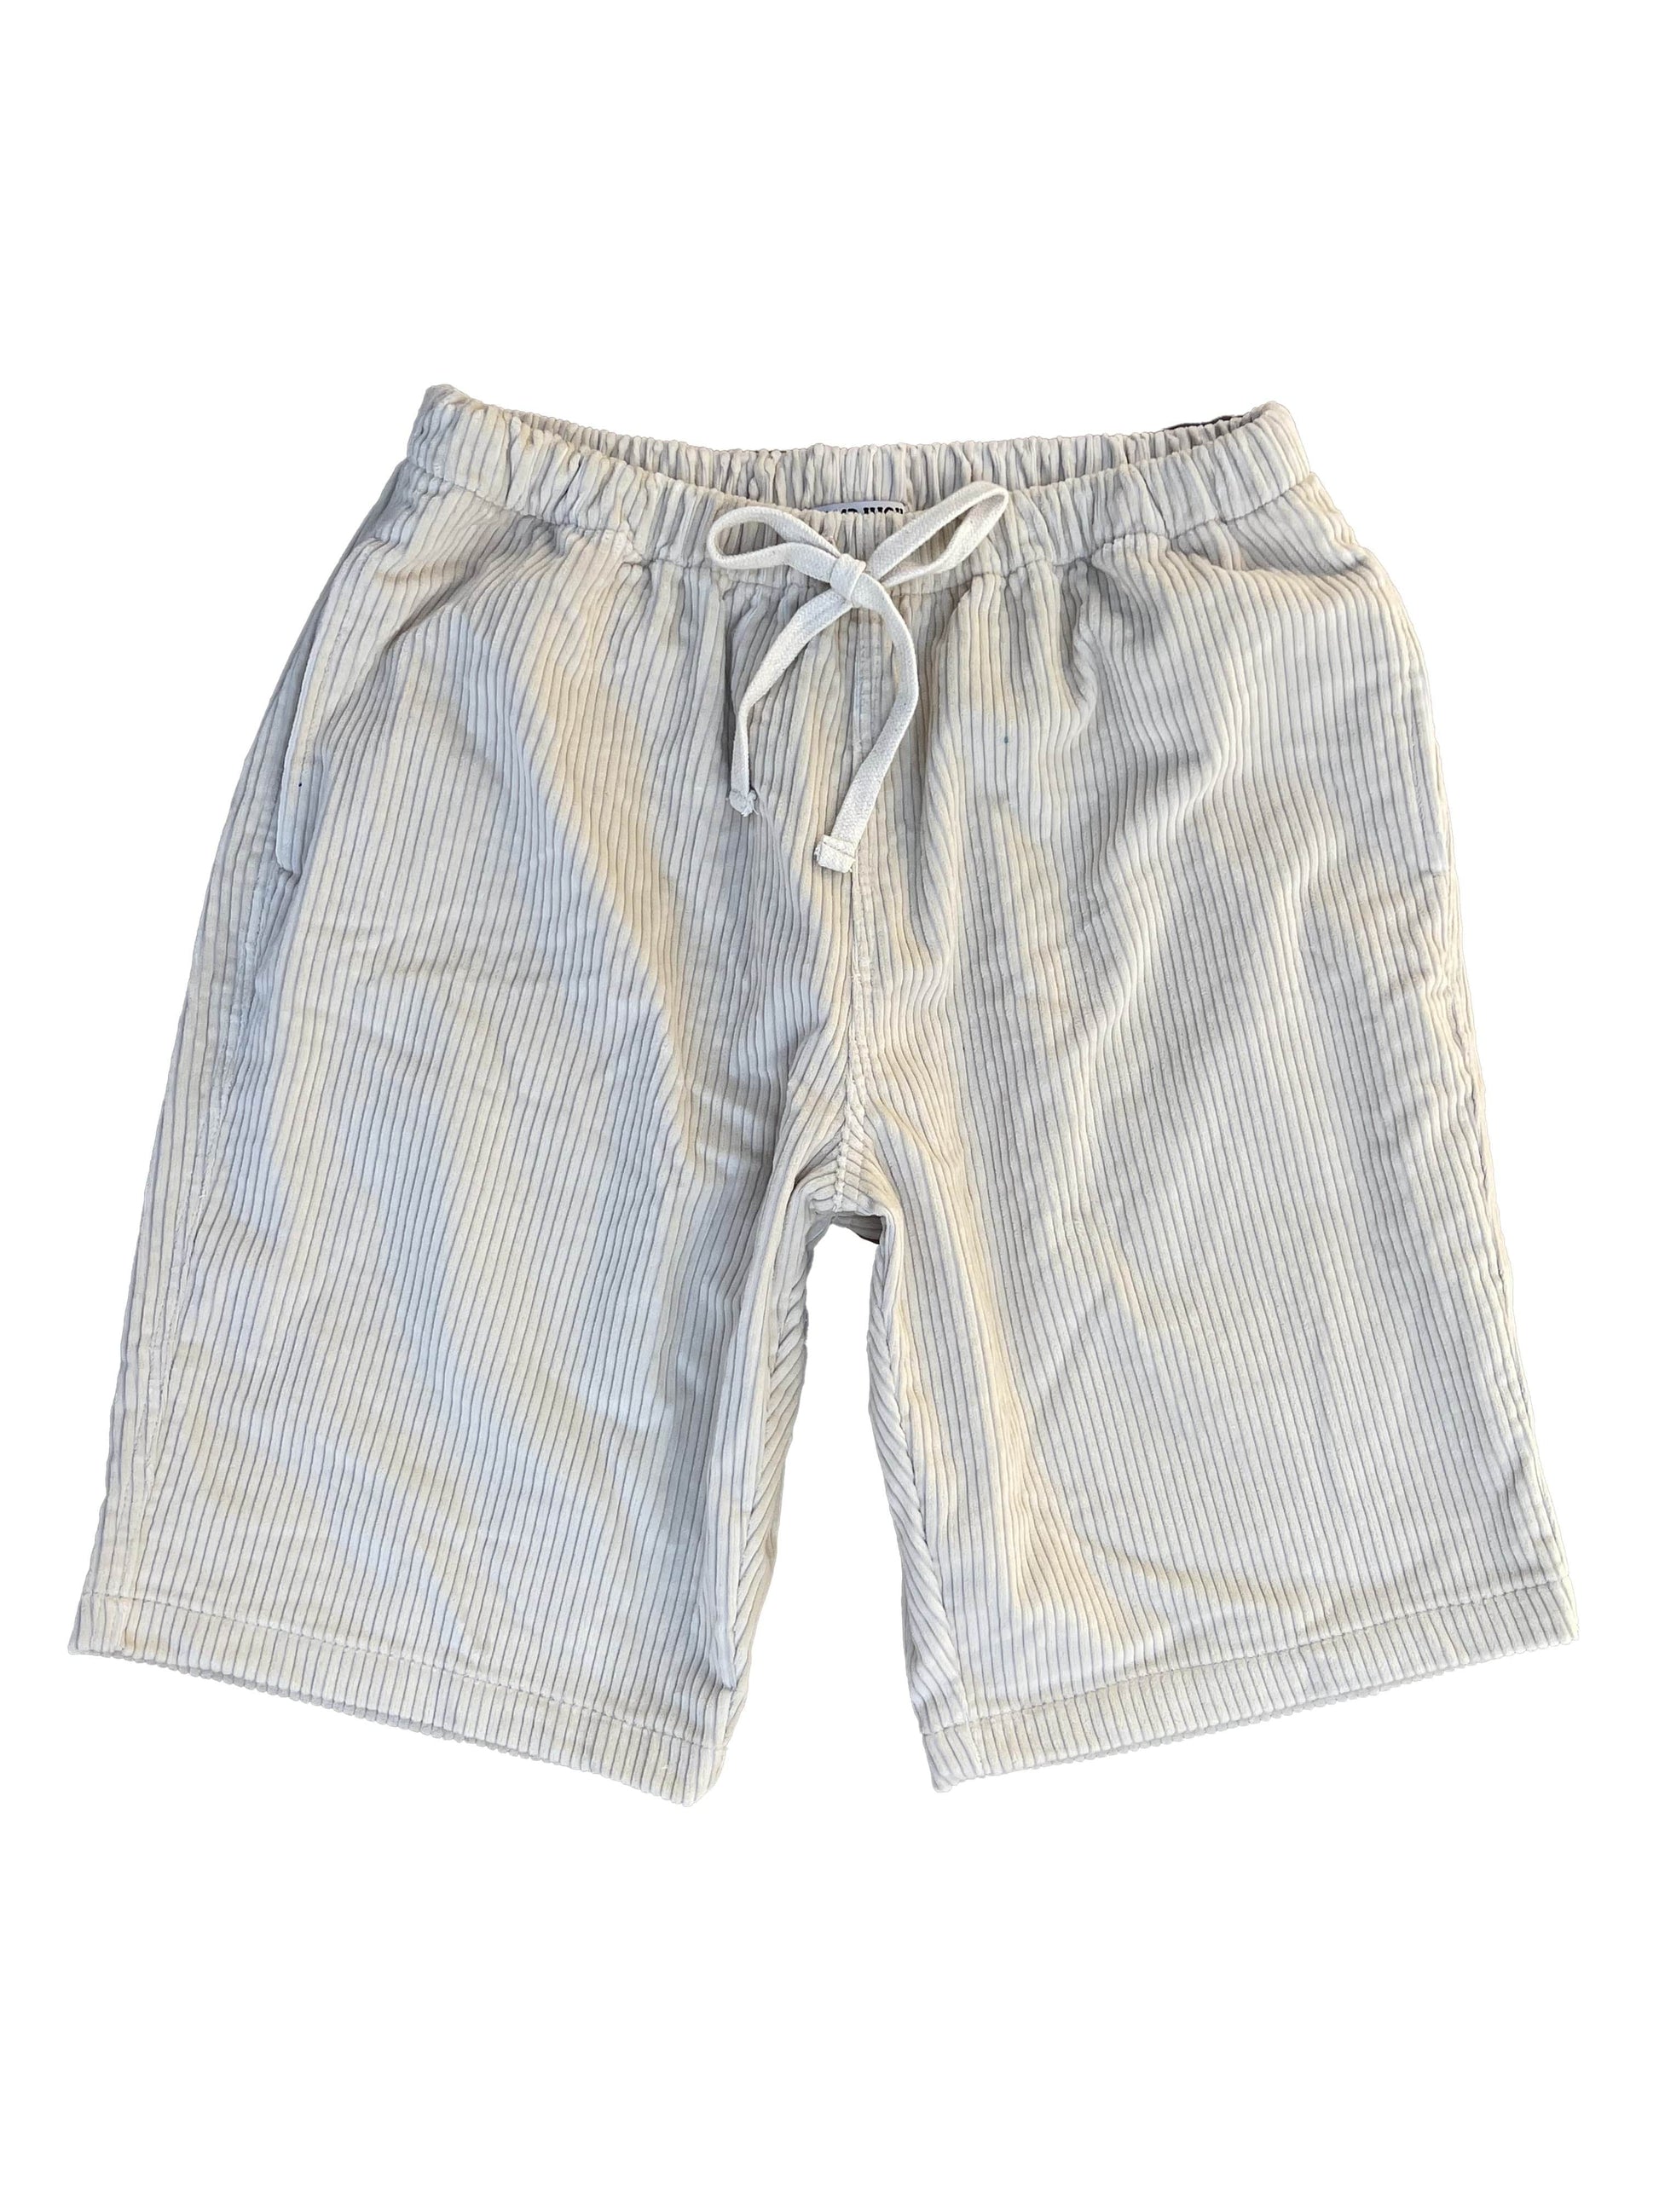 Camp High S/M / Cream Zen Cord Shorts